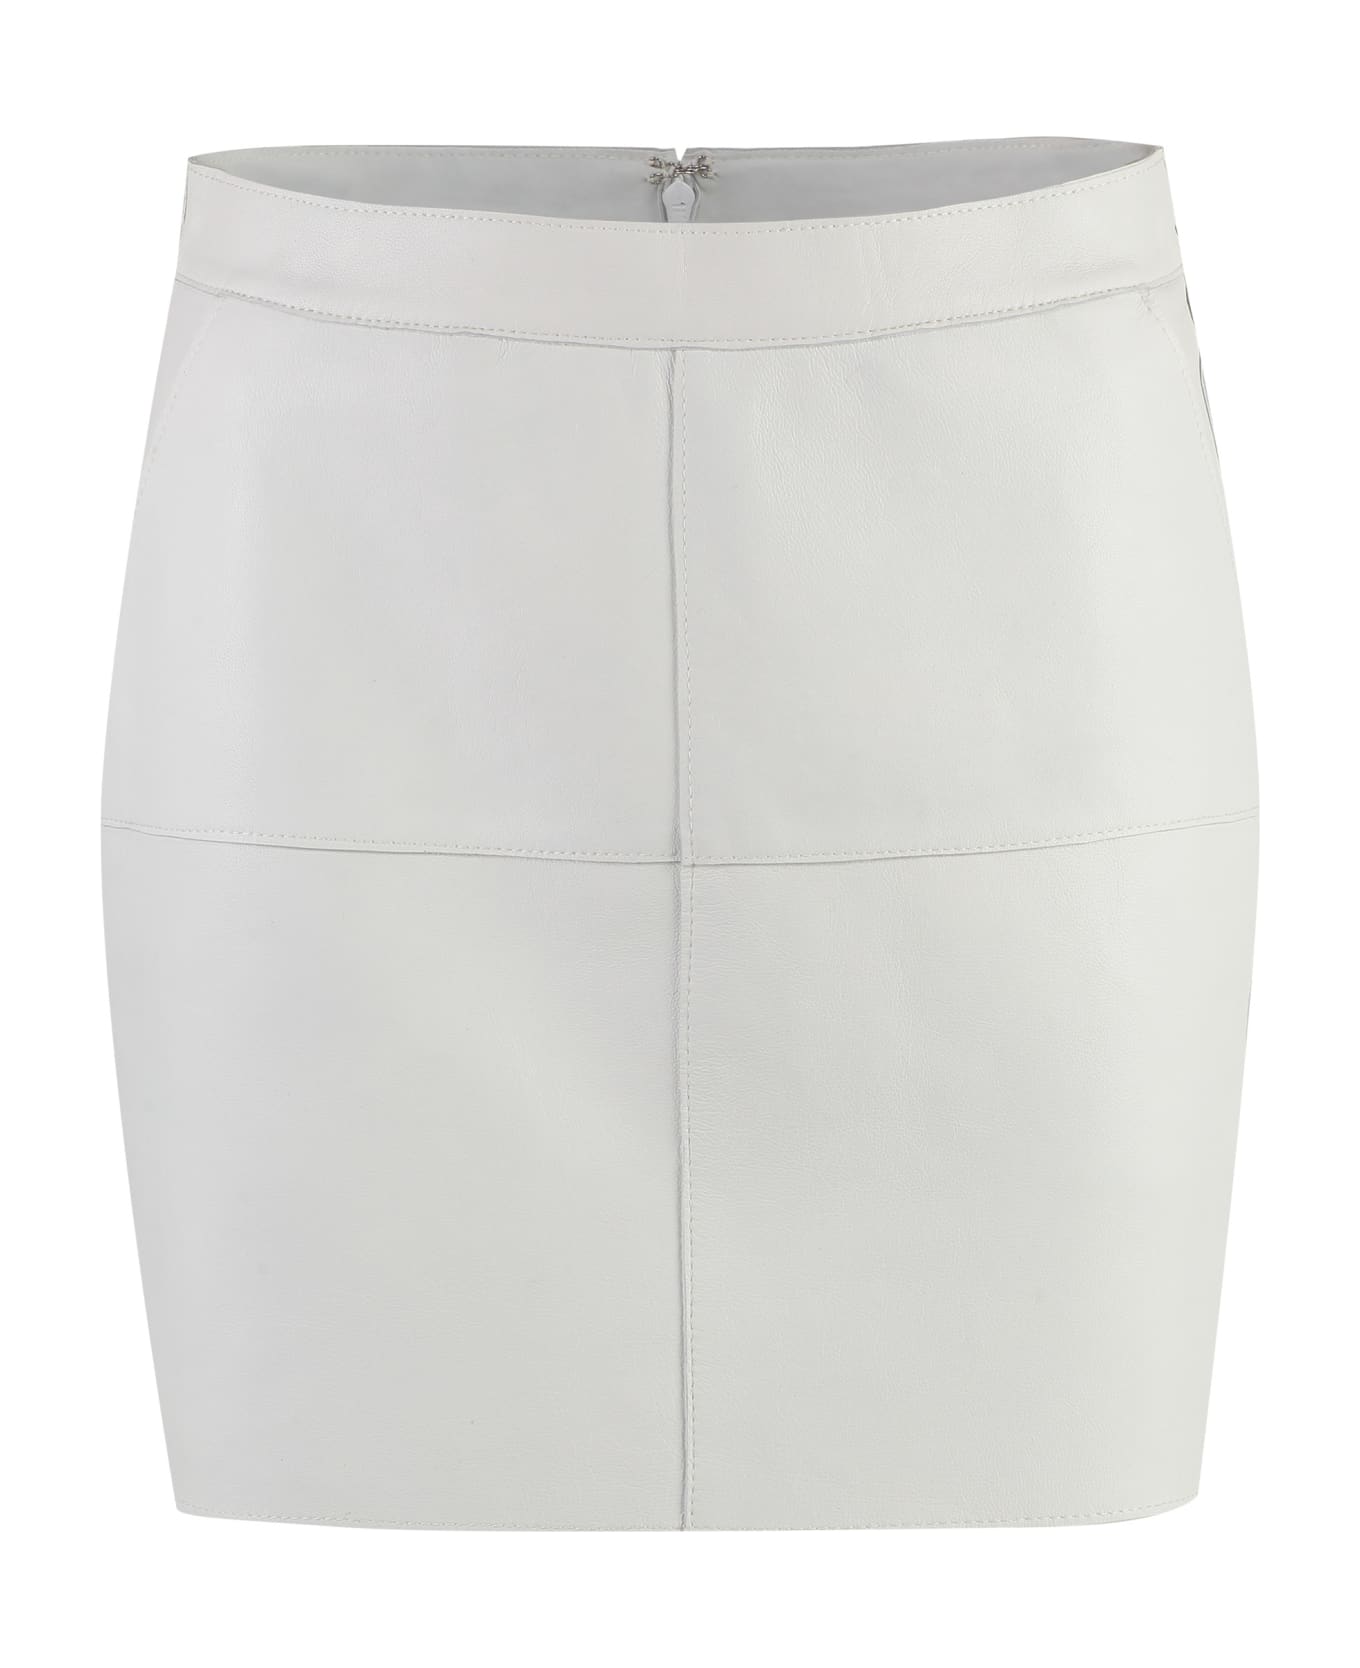 Parosh Leather Mini Skirt - grey